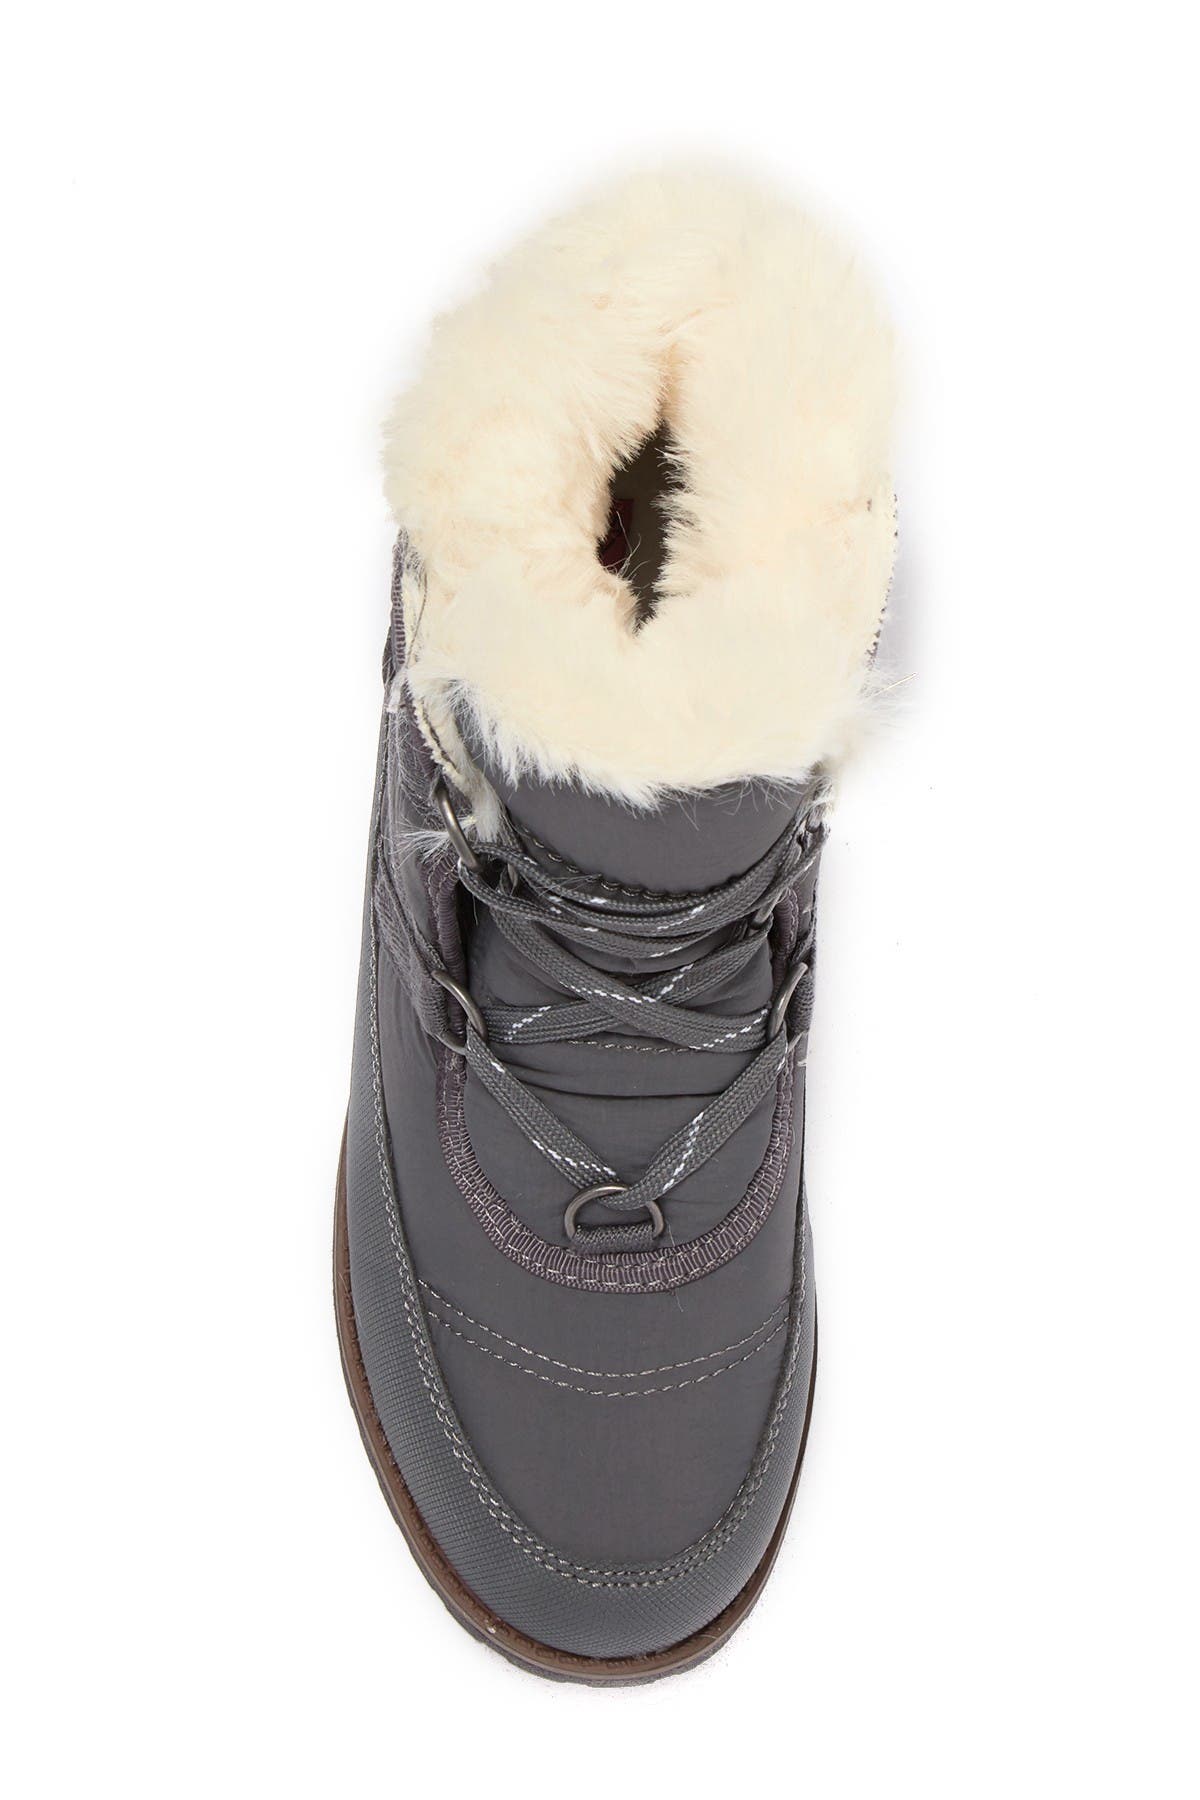 danlea faux fur lined boot